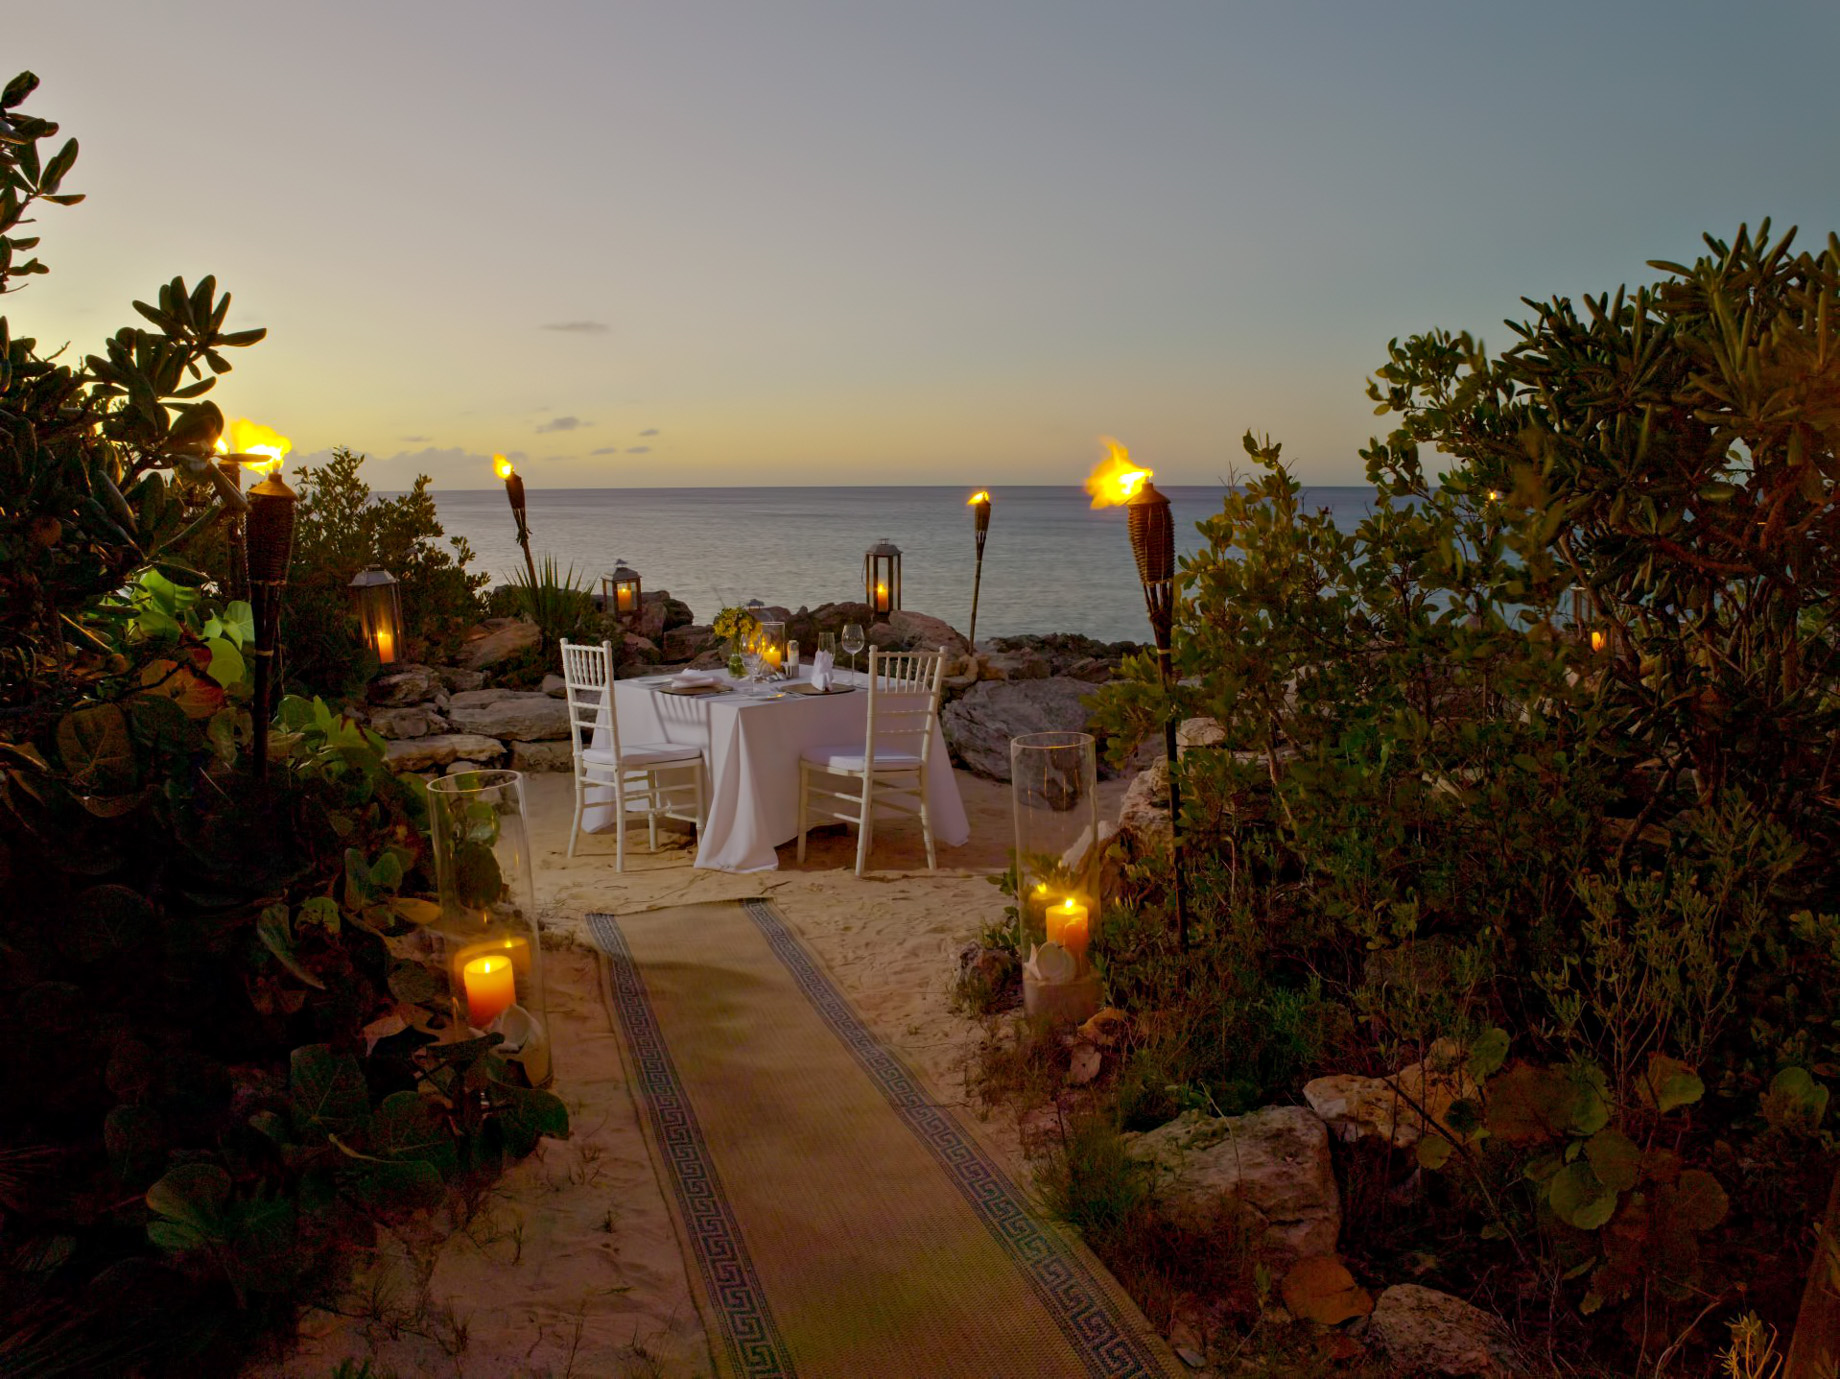 Amanyara Resort – Providenciales, Turks and Caicos Islands – Sunset Beach Dining